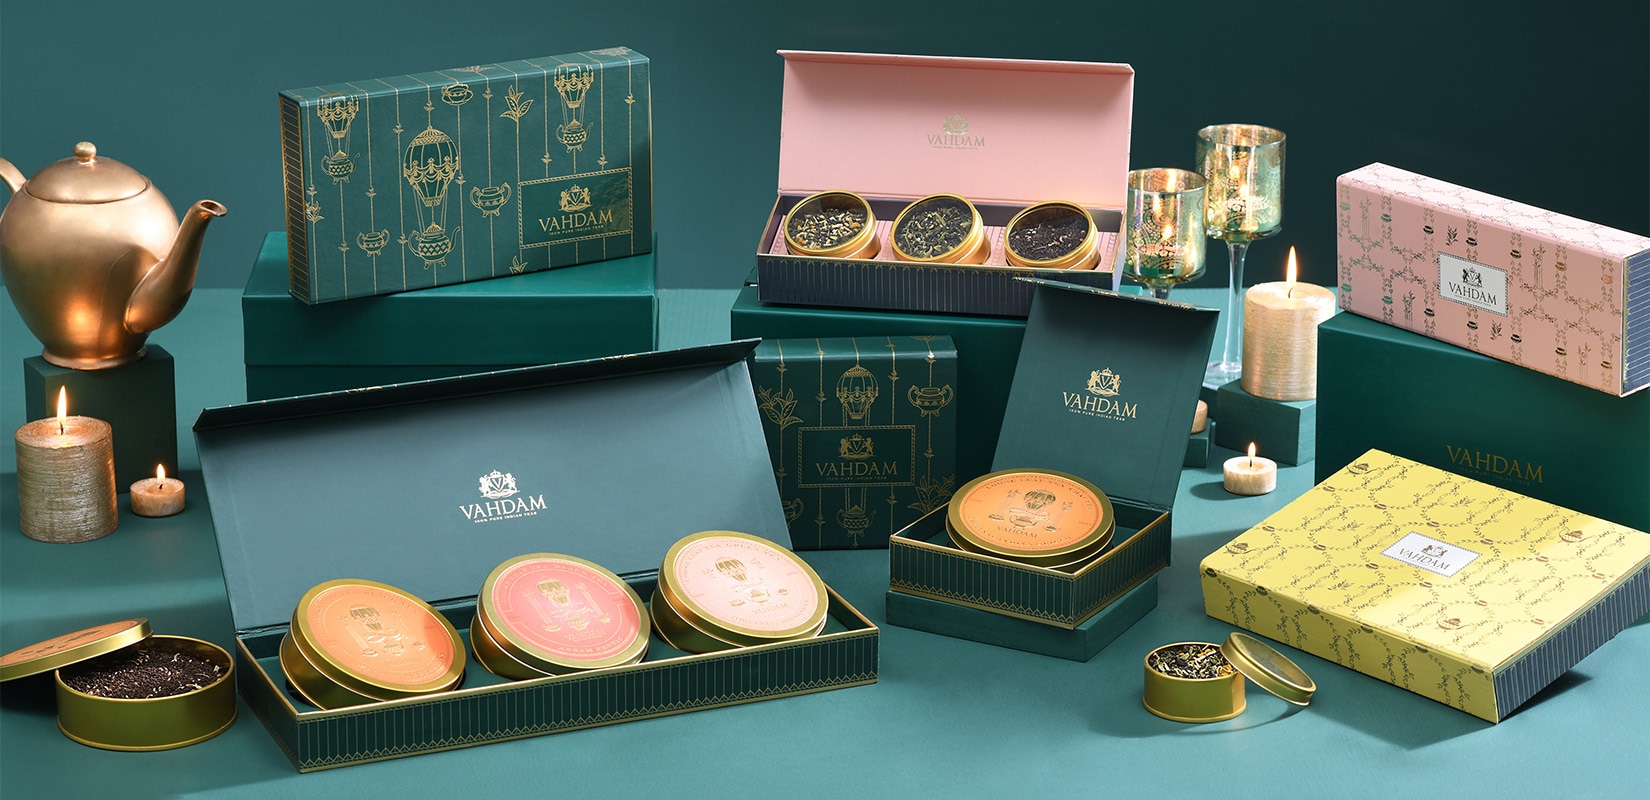 vahdam teas review gift sets luxe digital